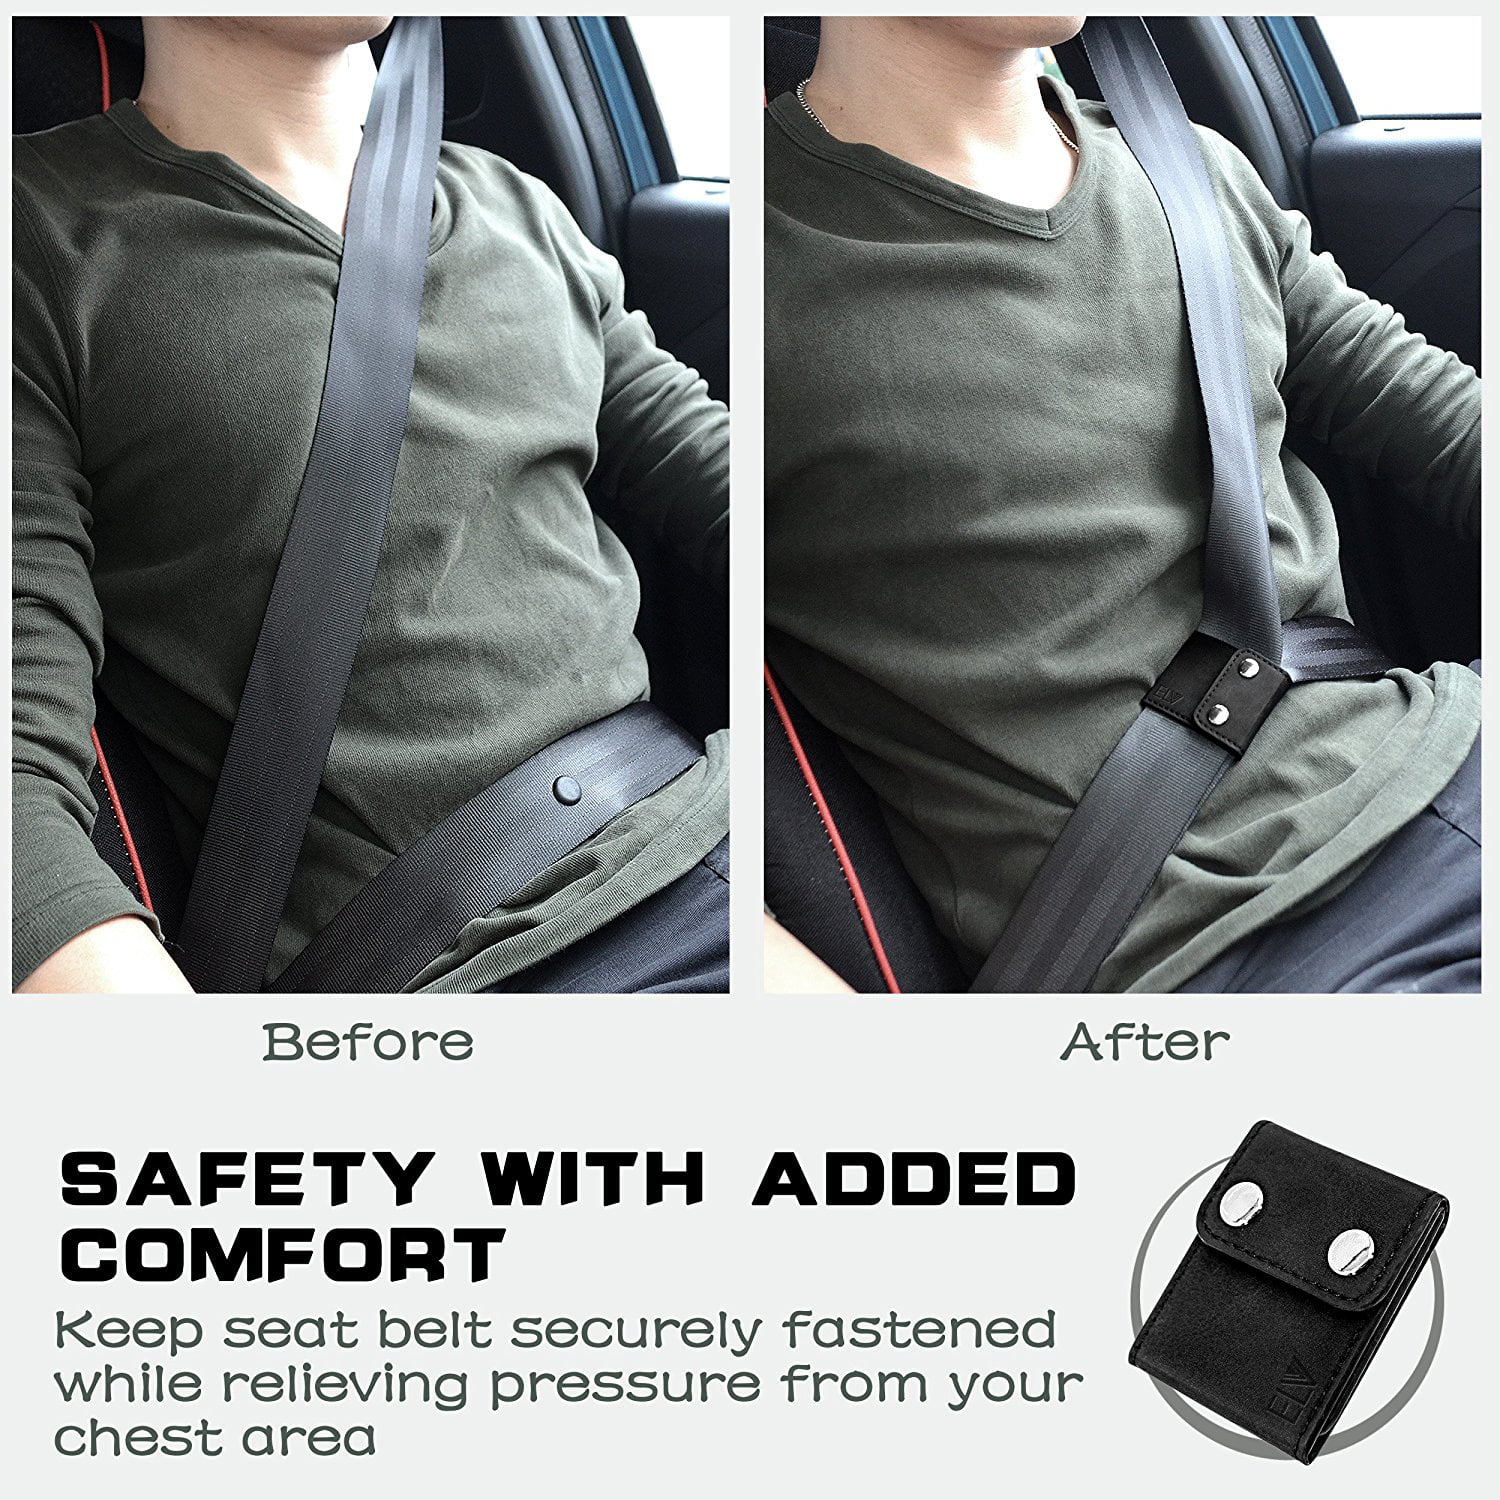 ZaCoo 2 Pcs Car Seat Belt Adjuster Seatbelt Clips Adjust Seat Belt Tightness to Relax Shoulder Neck Carbon Fiber Texture Black